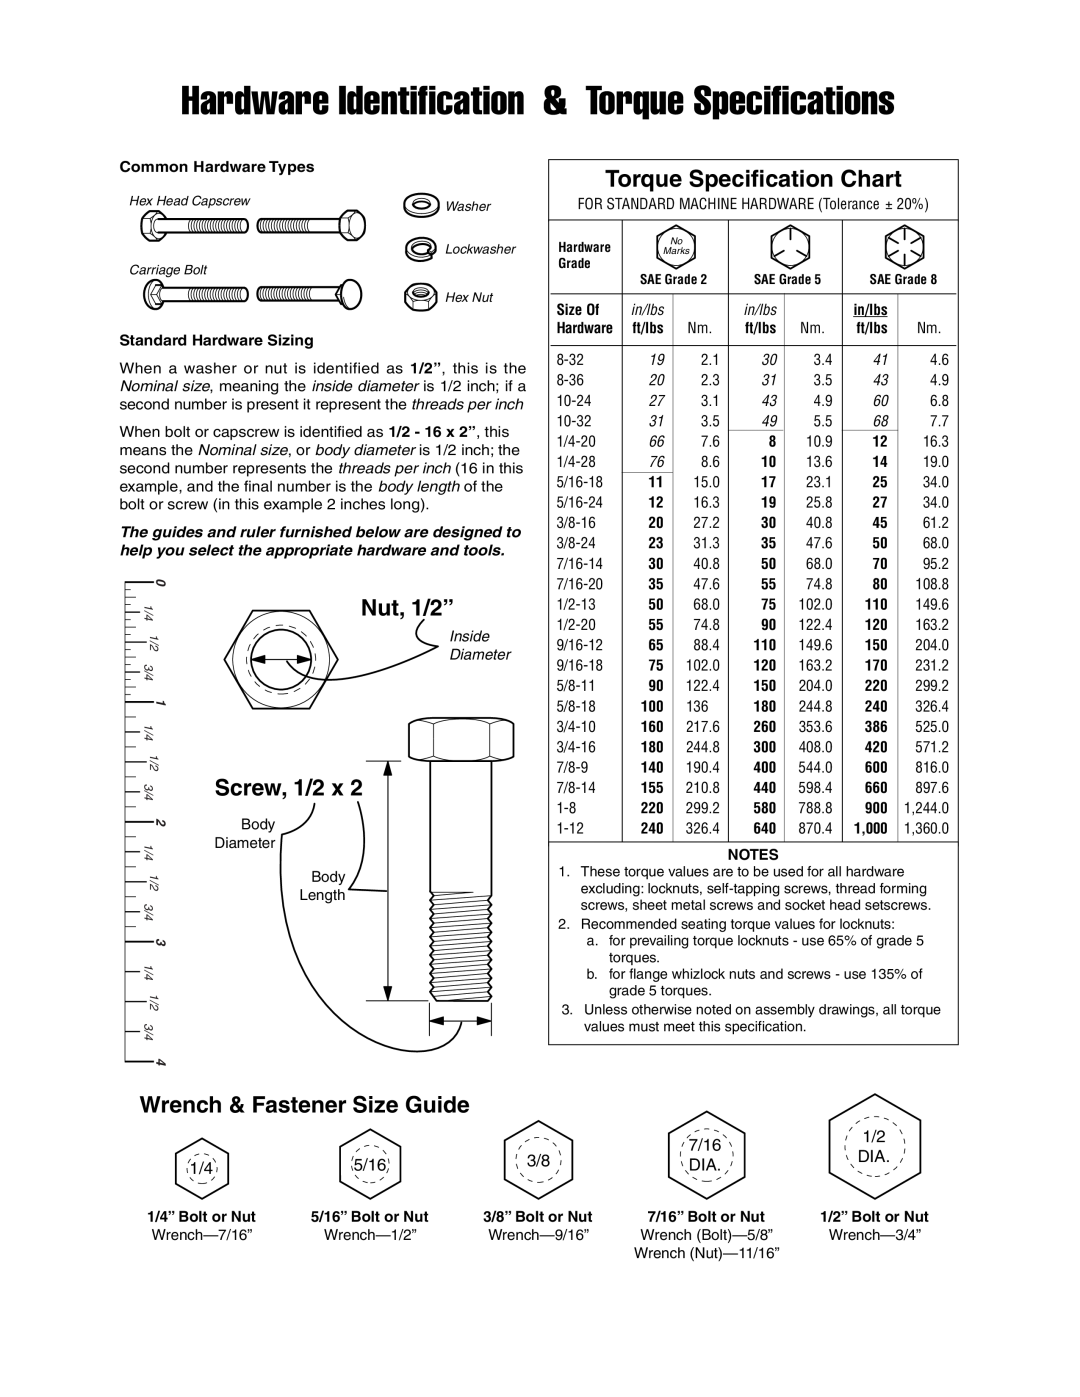 Snapper Lancer / 4400 Hardware Identification & Torque Specifications, Torque Specification Chart, Nut, 1/2”, Screw, 1/2 